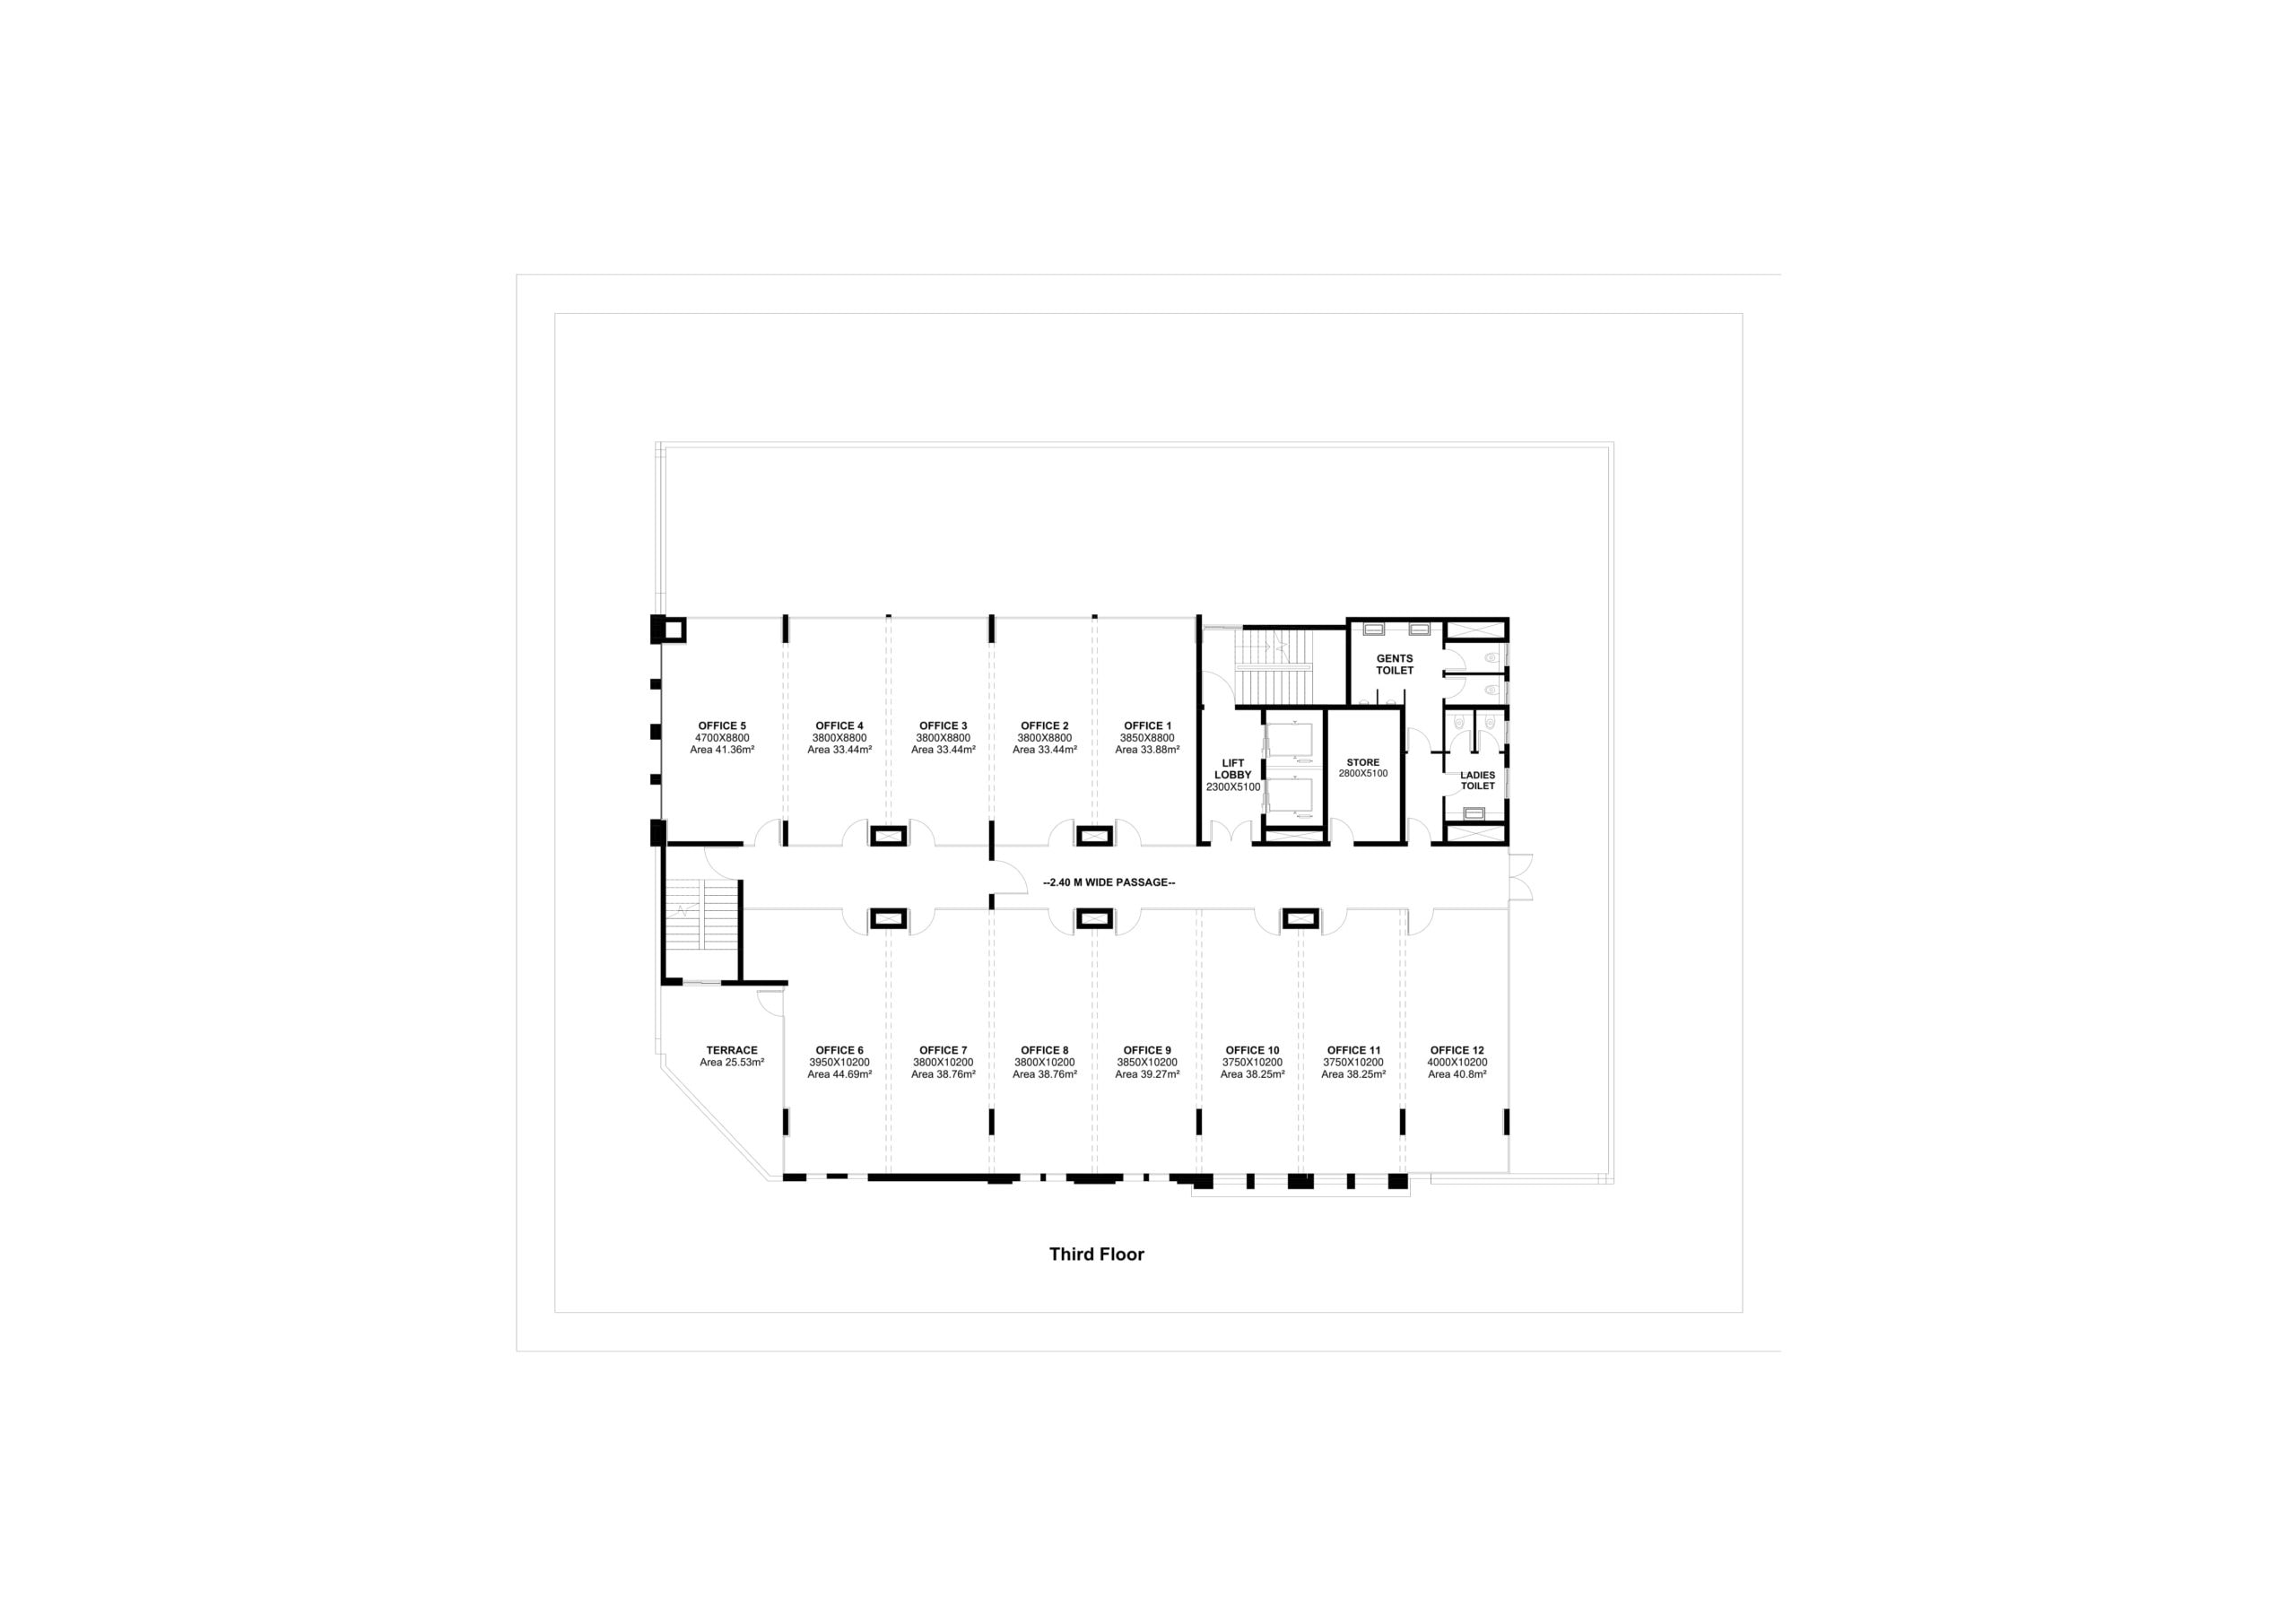 A monochrome floor plan illustrating 60 offices.